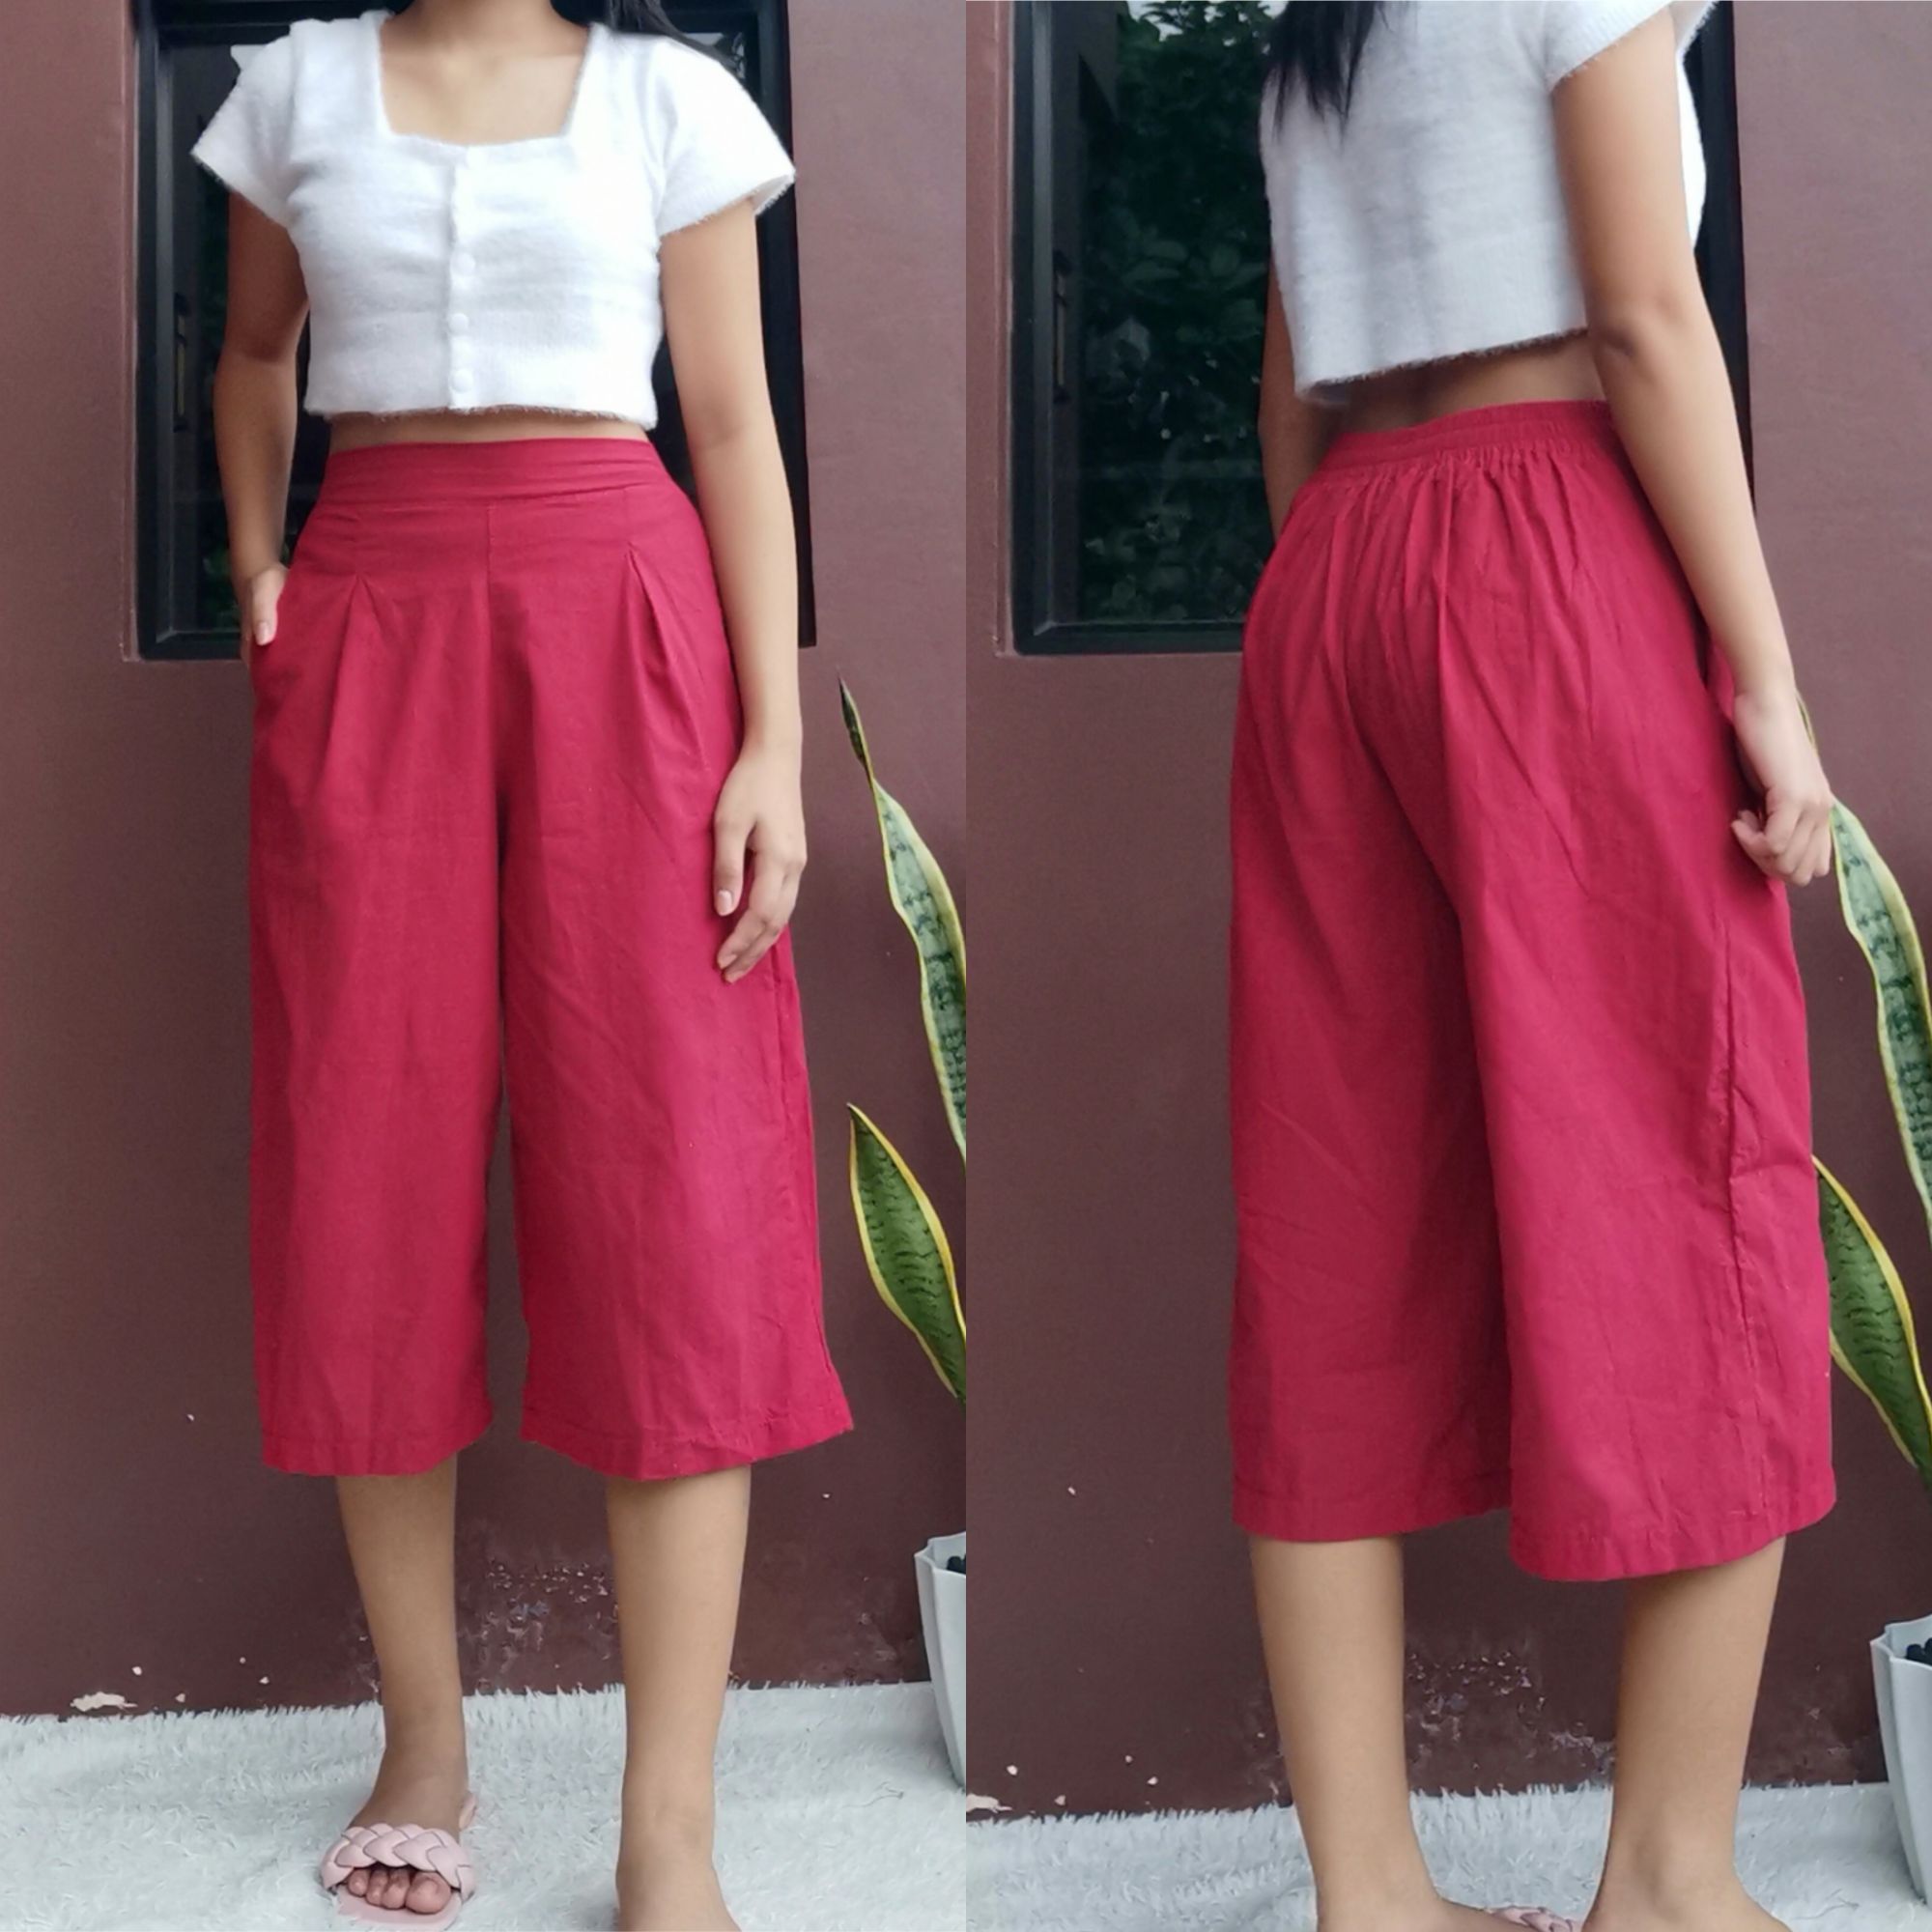 GATclothing - Tukong/Pedal pants - Cotton Linen - High quality fabric